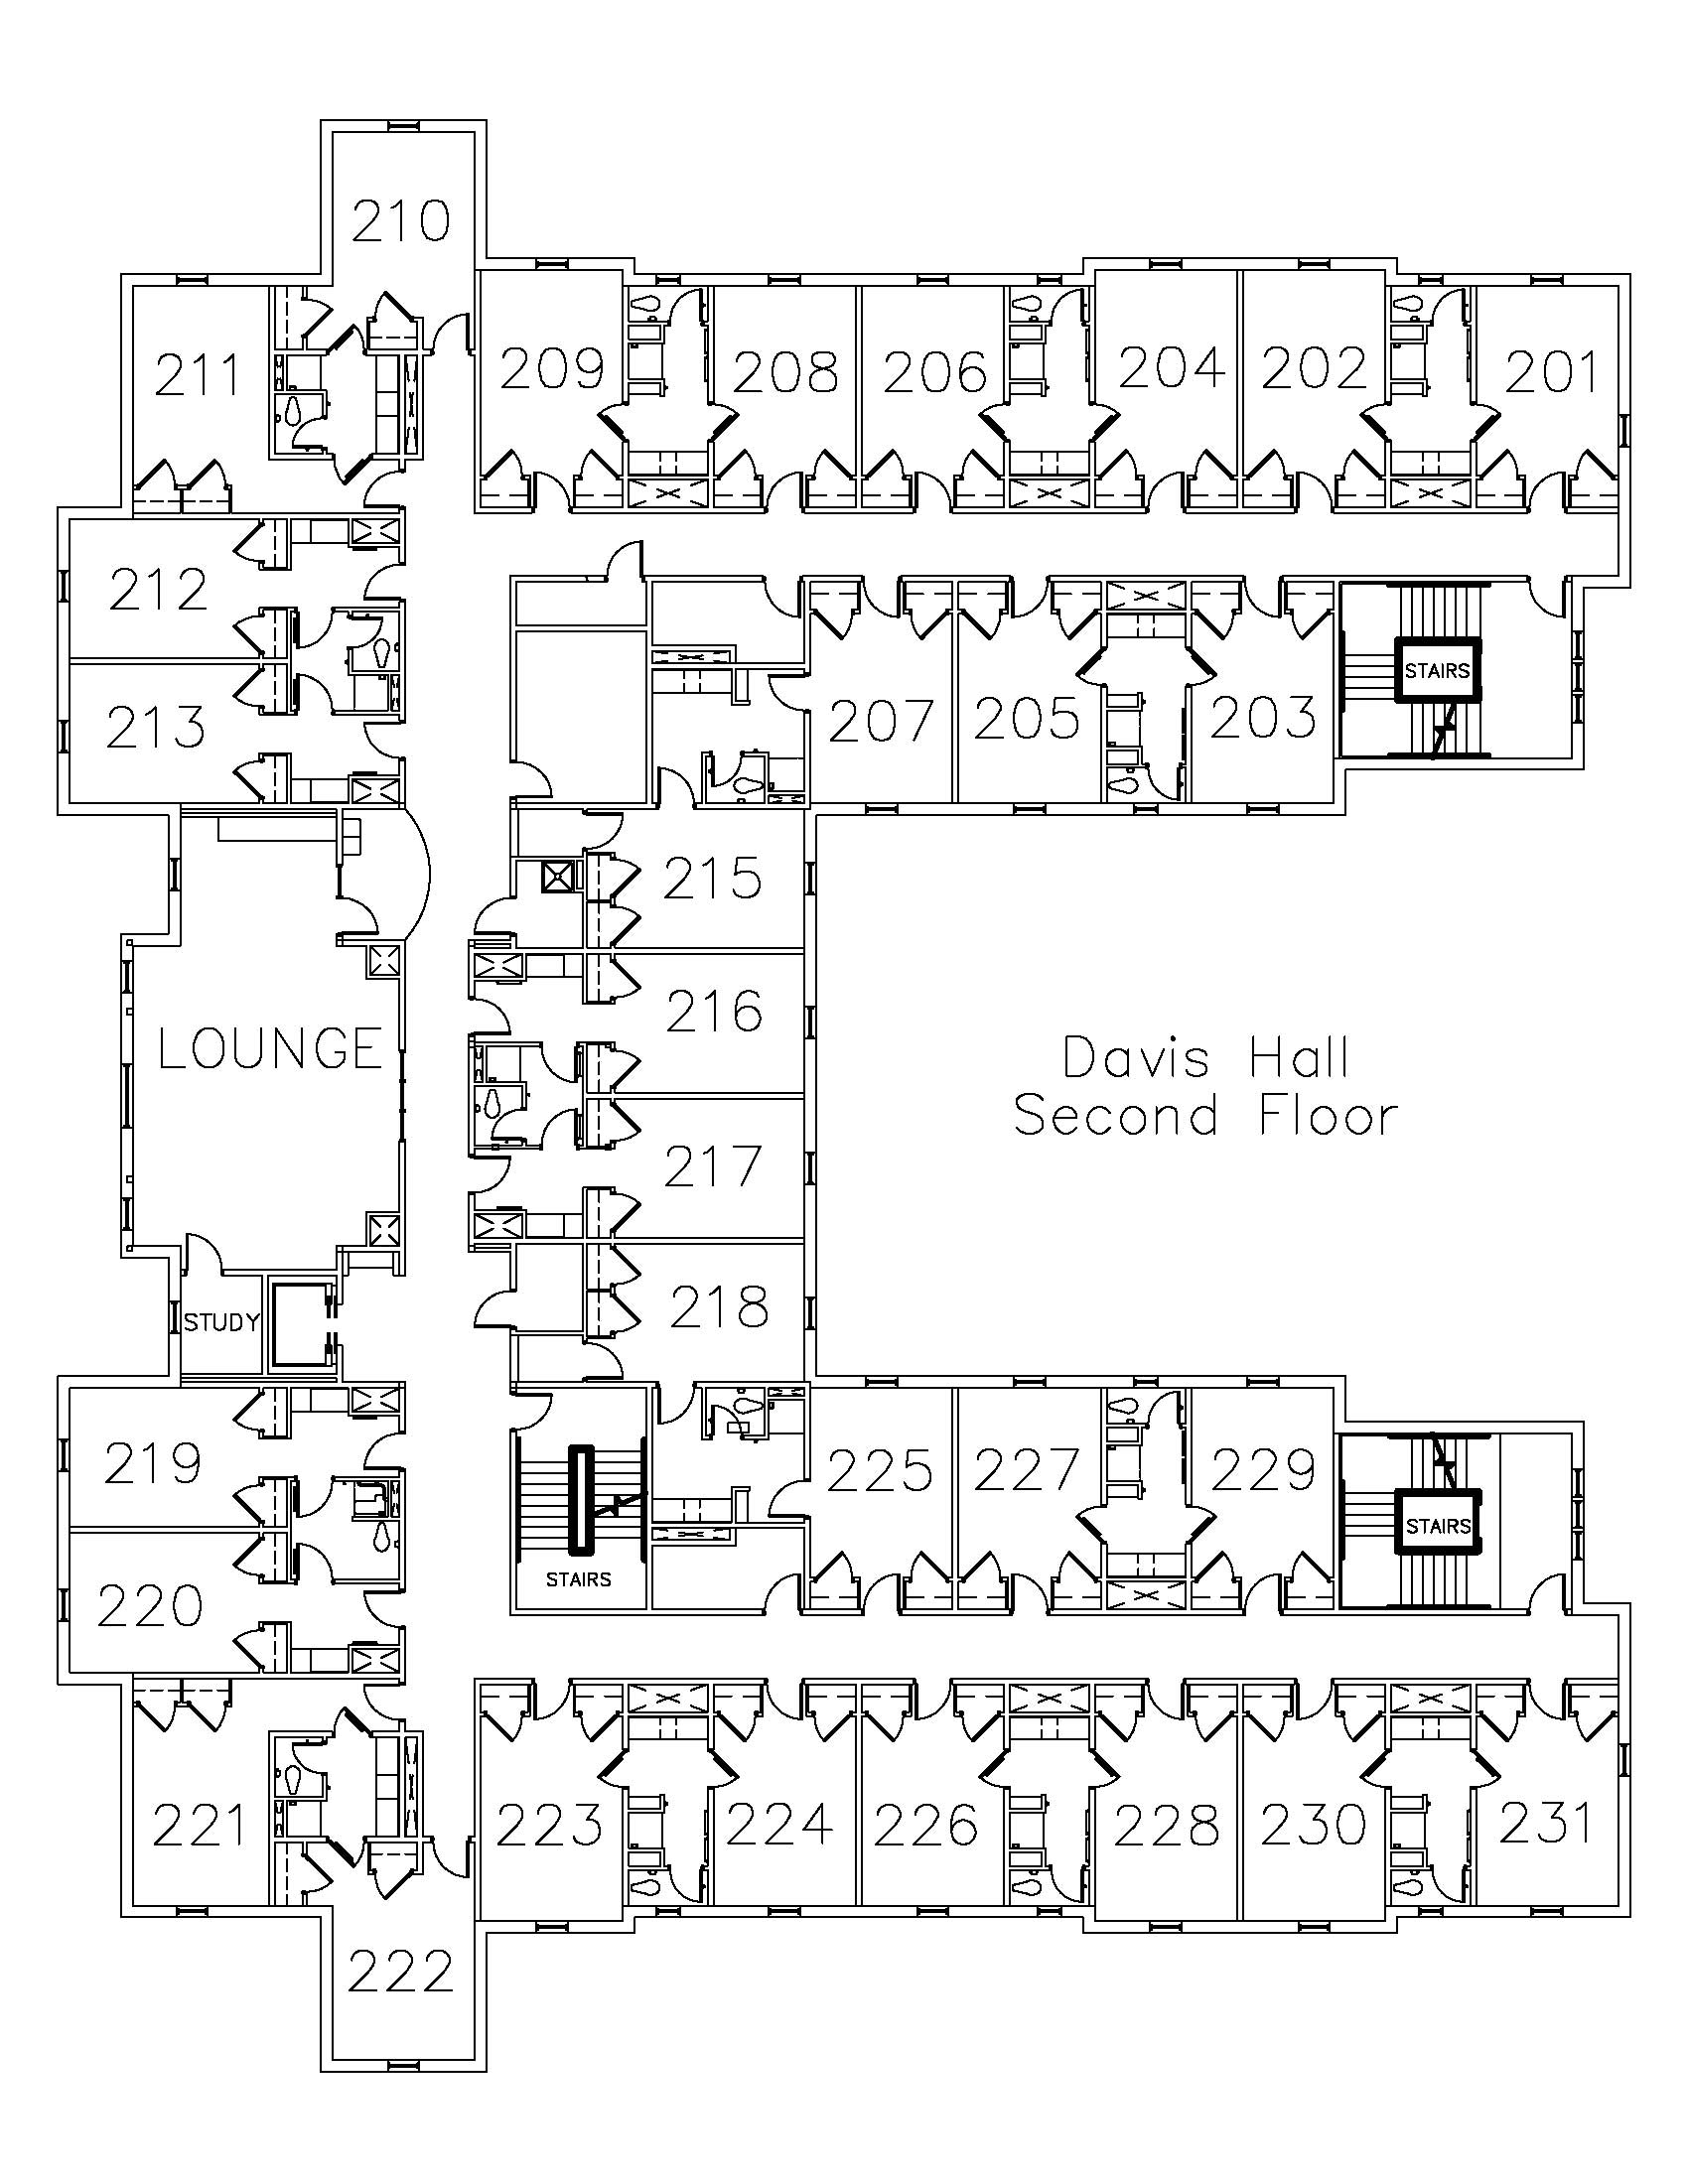 Davis Hall Second Floor